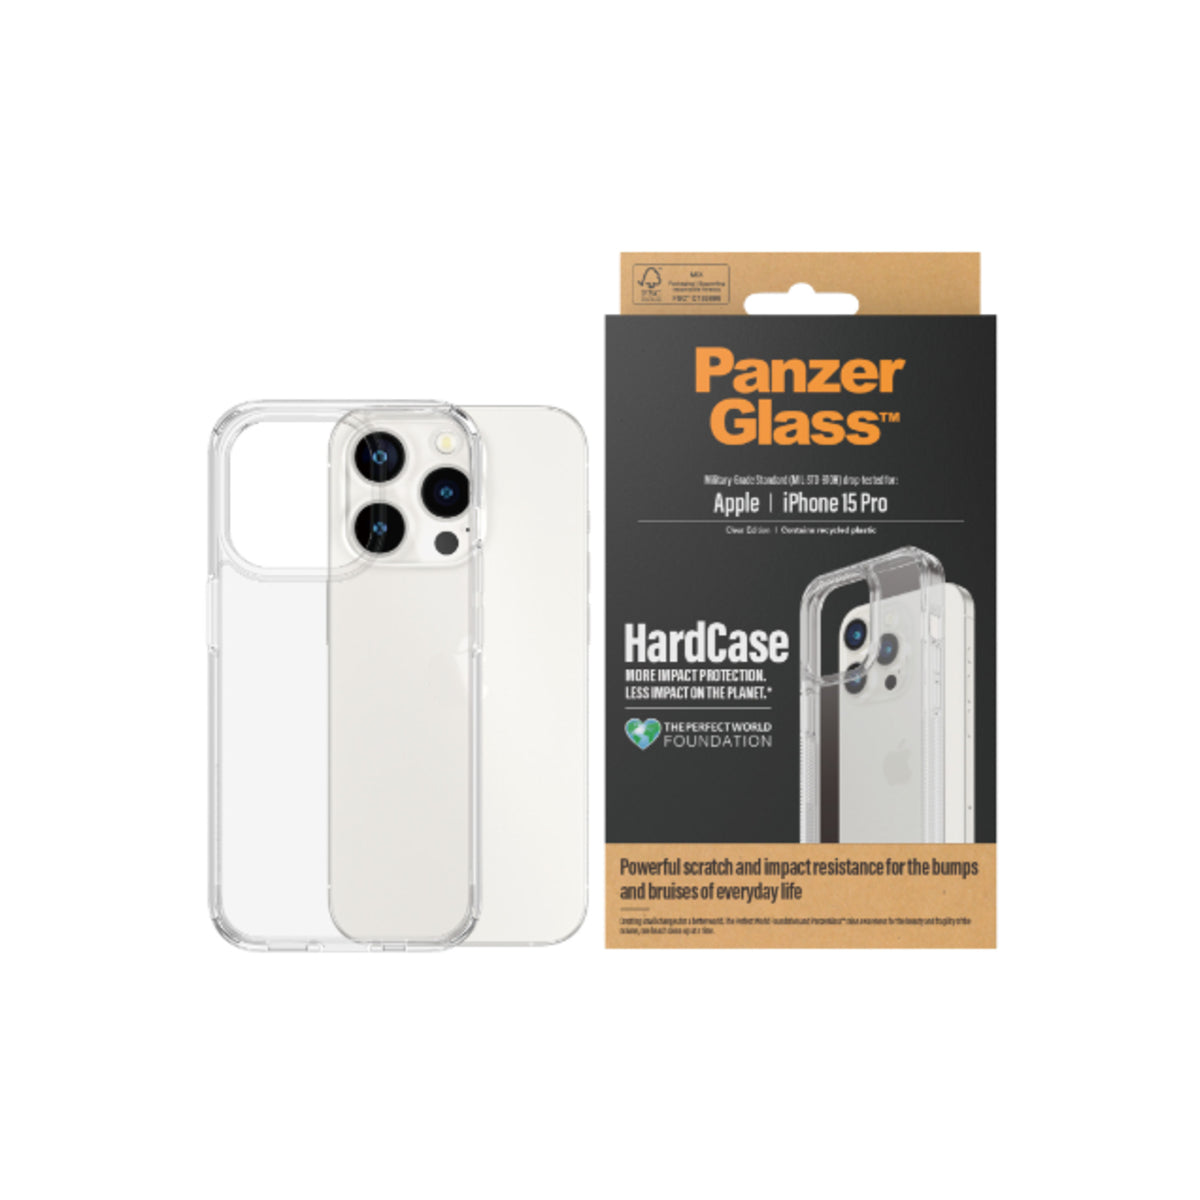 PanzerGlass Hardcase Phone Case for iPhone 15 Pro